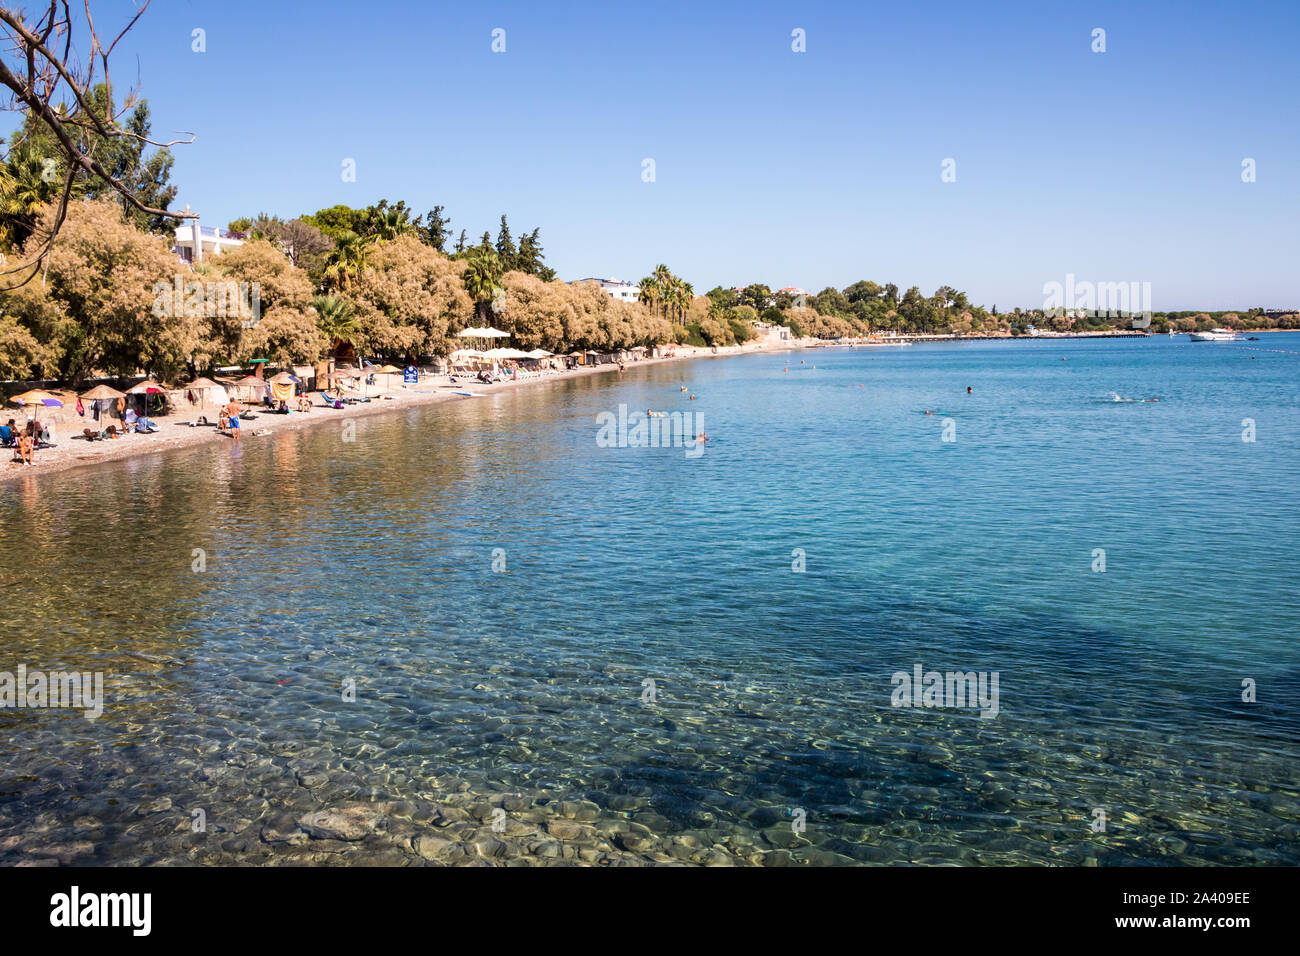 People swimming and sunbathing on Hastane Alti beach, Datca, Turkey Stock Photo